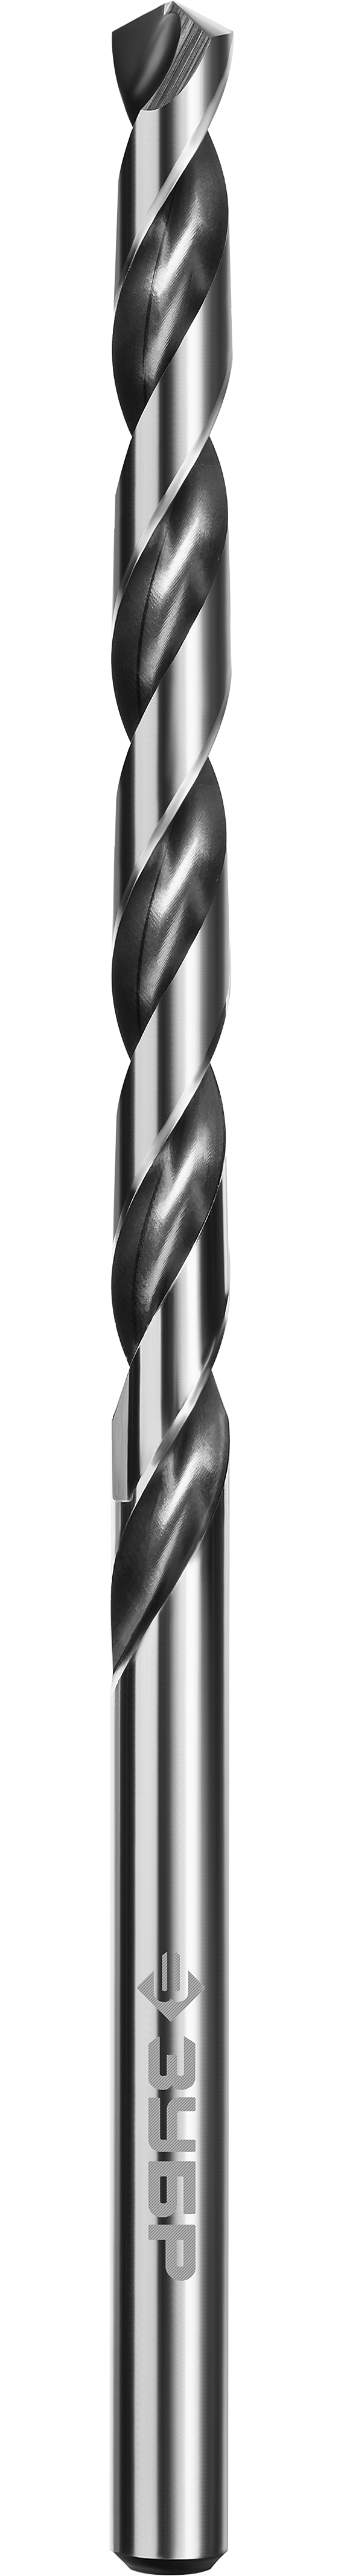 Сверло ⌀9 мм x 17.5 см/11.5 см, сталь Р6М5, по металлу, ЗУБР ПРОФ-А, класс A, 1 шт. (29624-9)